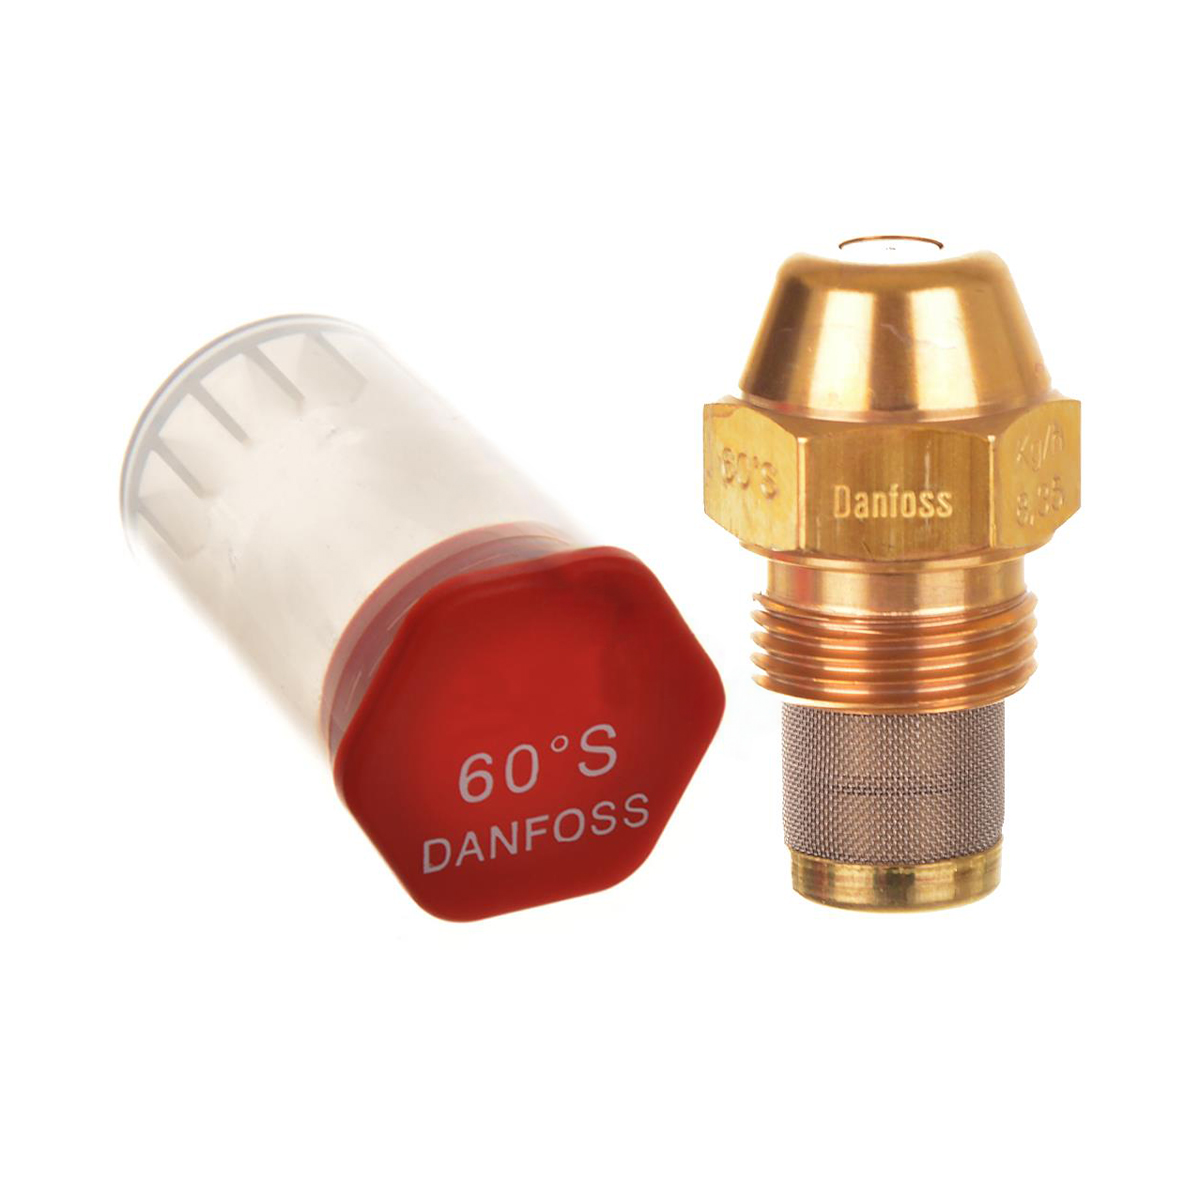 Danfoss 030F6132 Brass Fuel Oil Nozzle (60°, Solid)